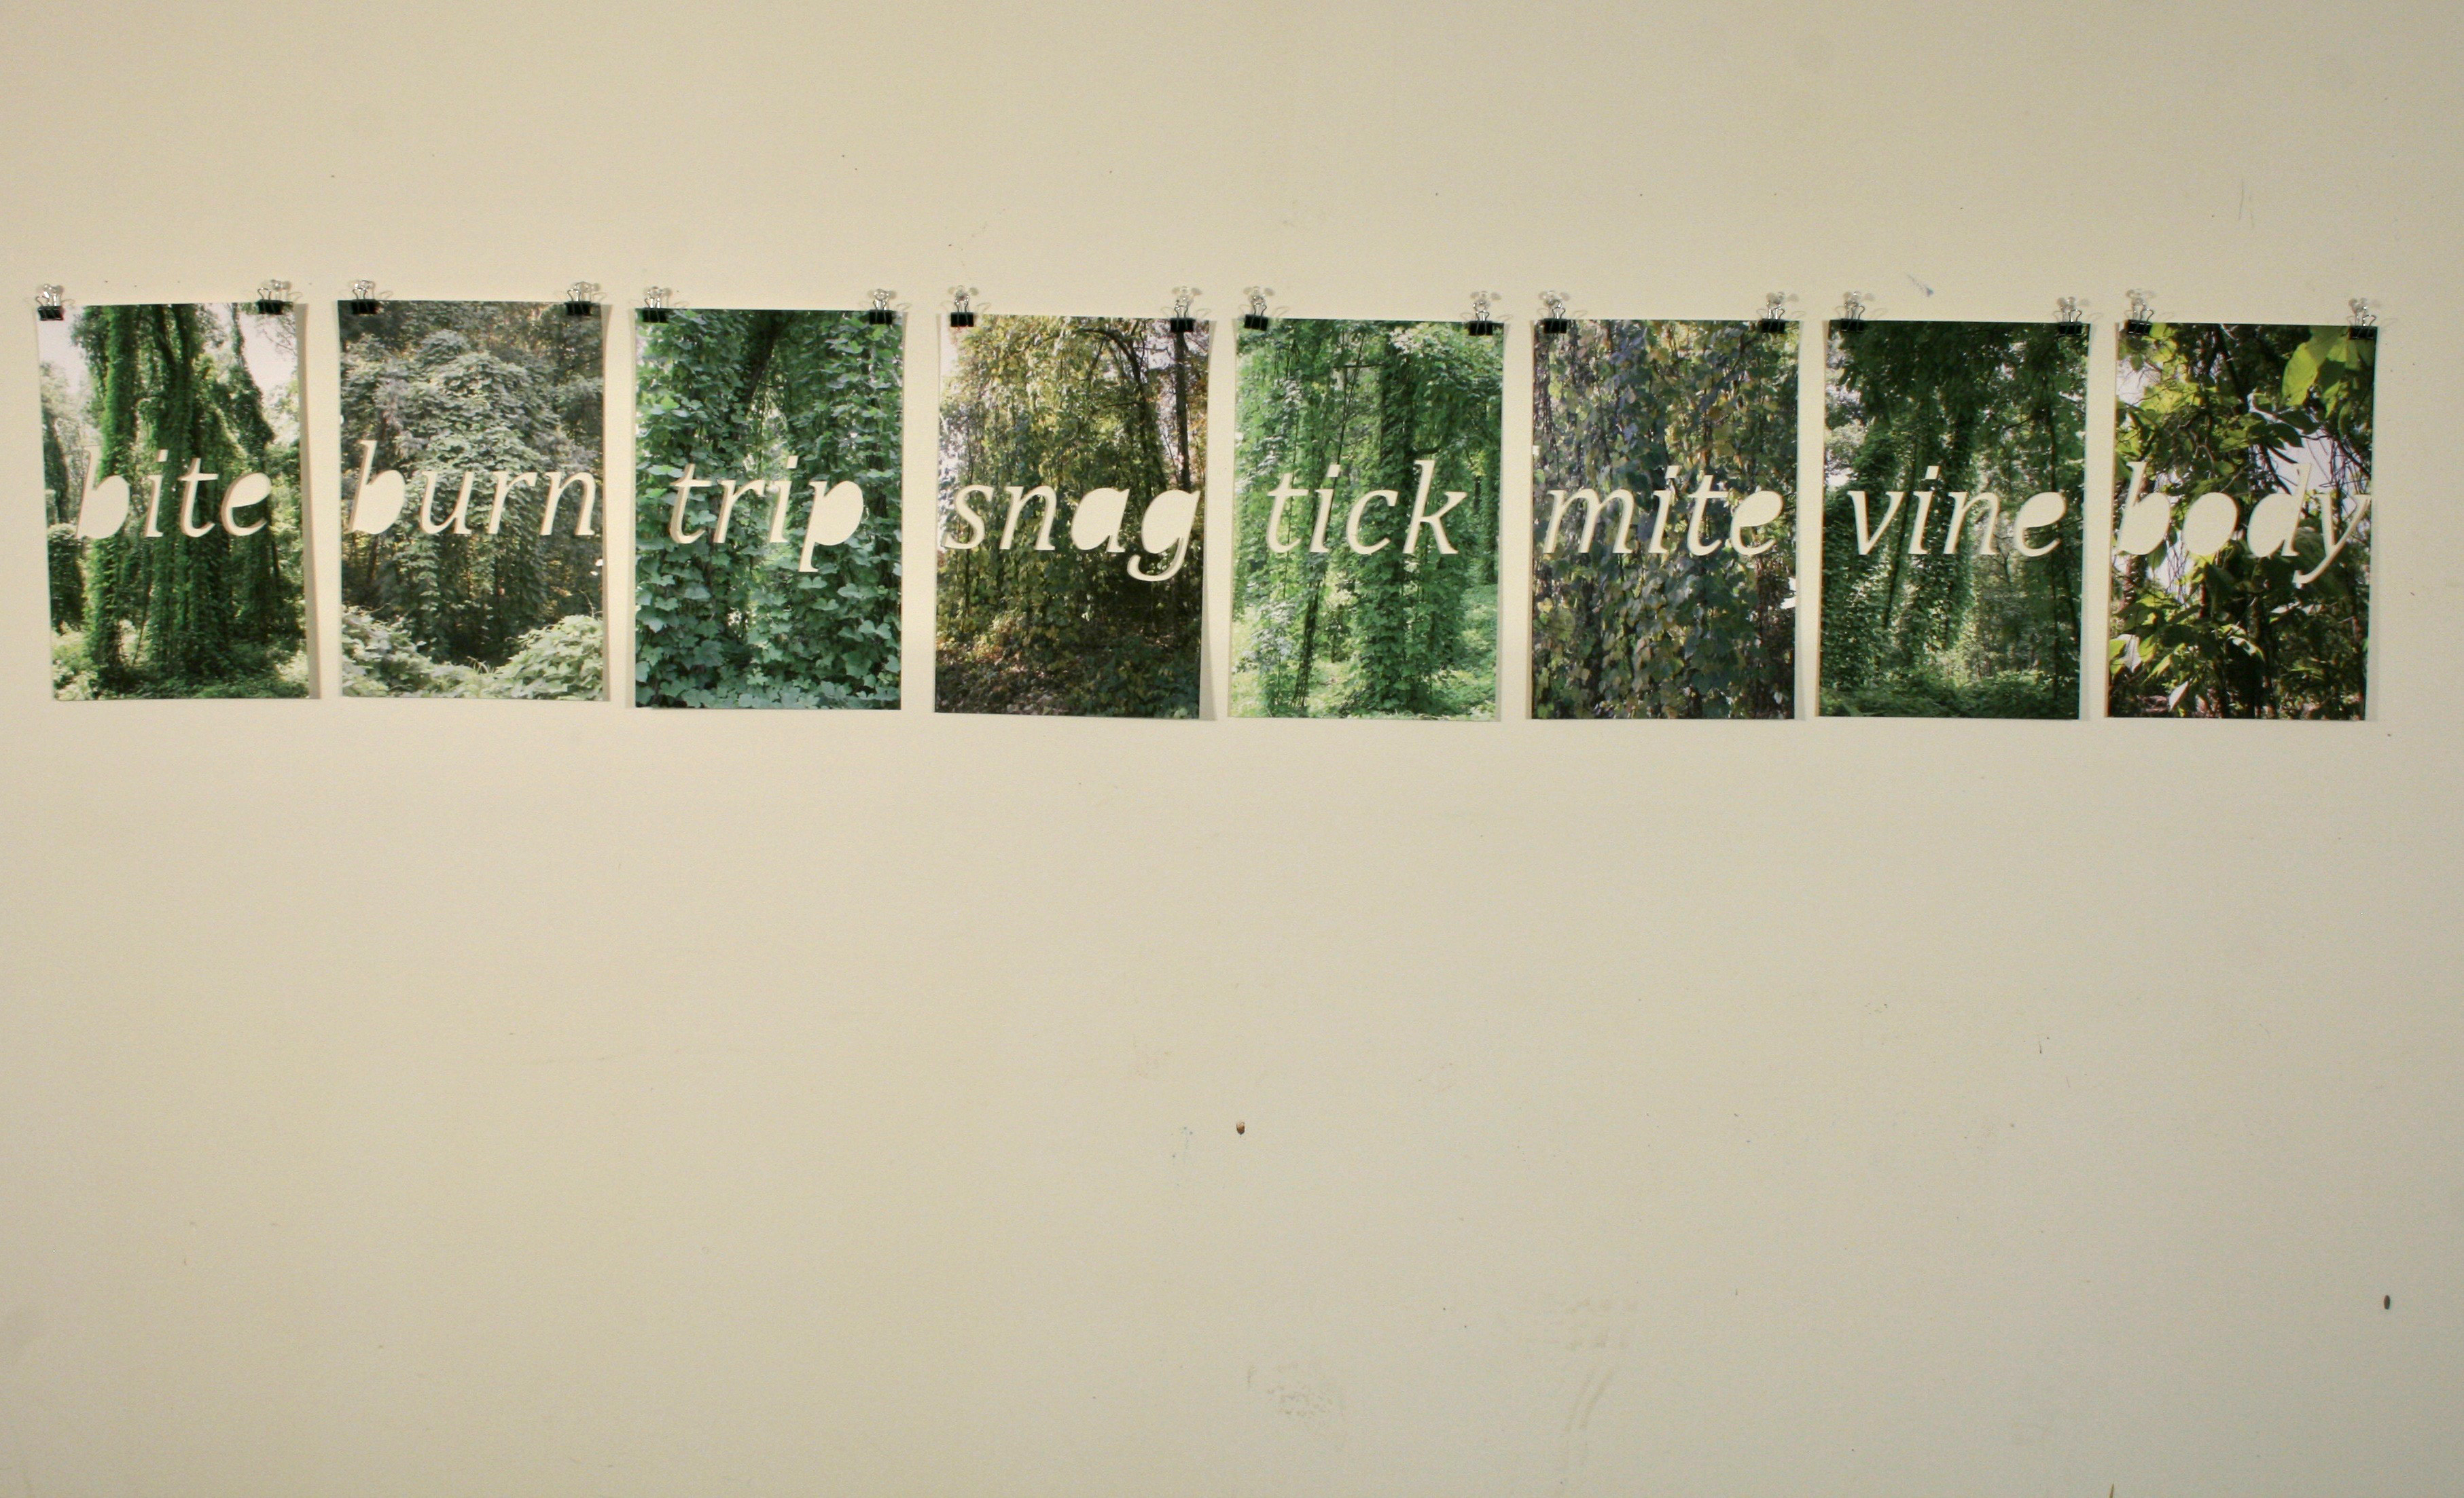 Jeffrey Morton, Landscape Nouns and Verbs: bite, burn, trip, snag, tick, mite, vine, body, 2015, cut digital print, 13.25" x 9"